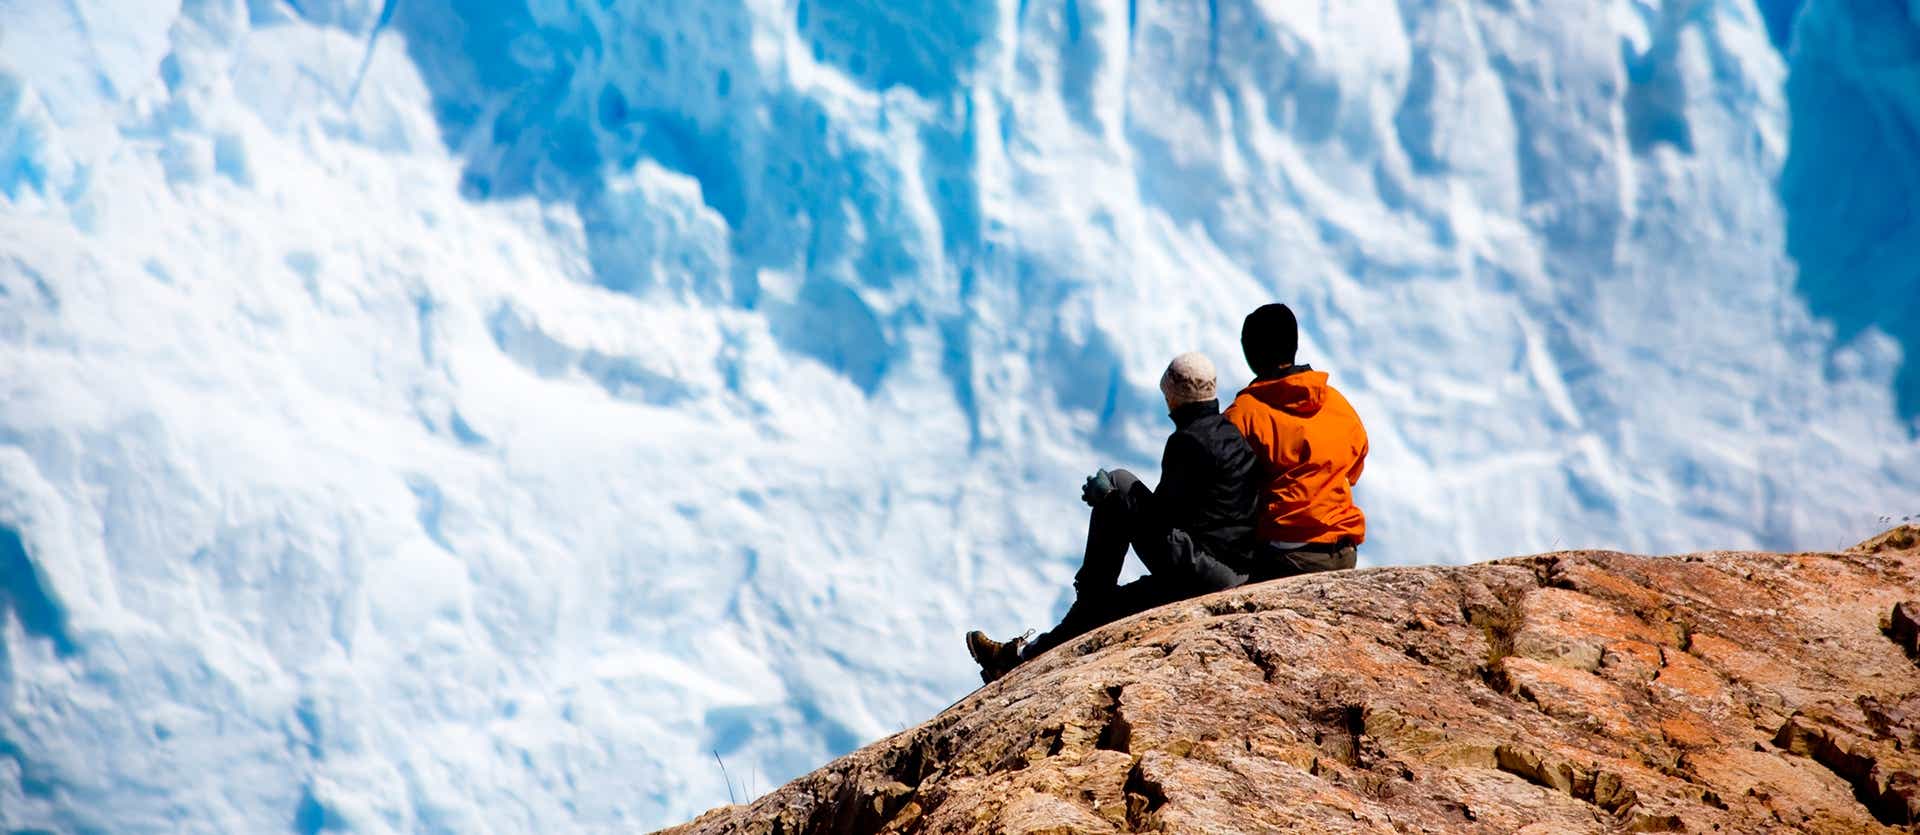 Glaciar Perito Moreno <span class="iconos separador"></span> El Calafate <span class="iconos separador"></span> Argentina